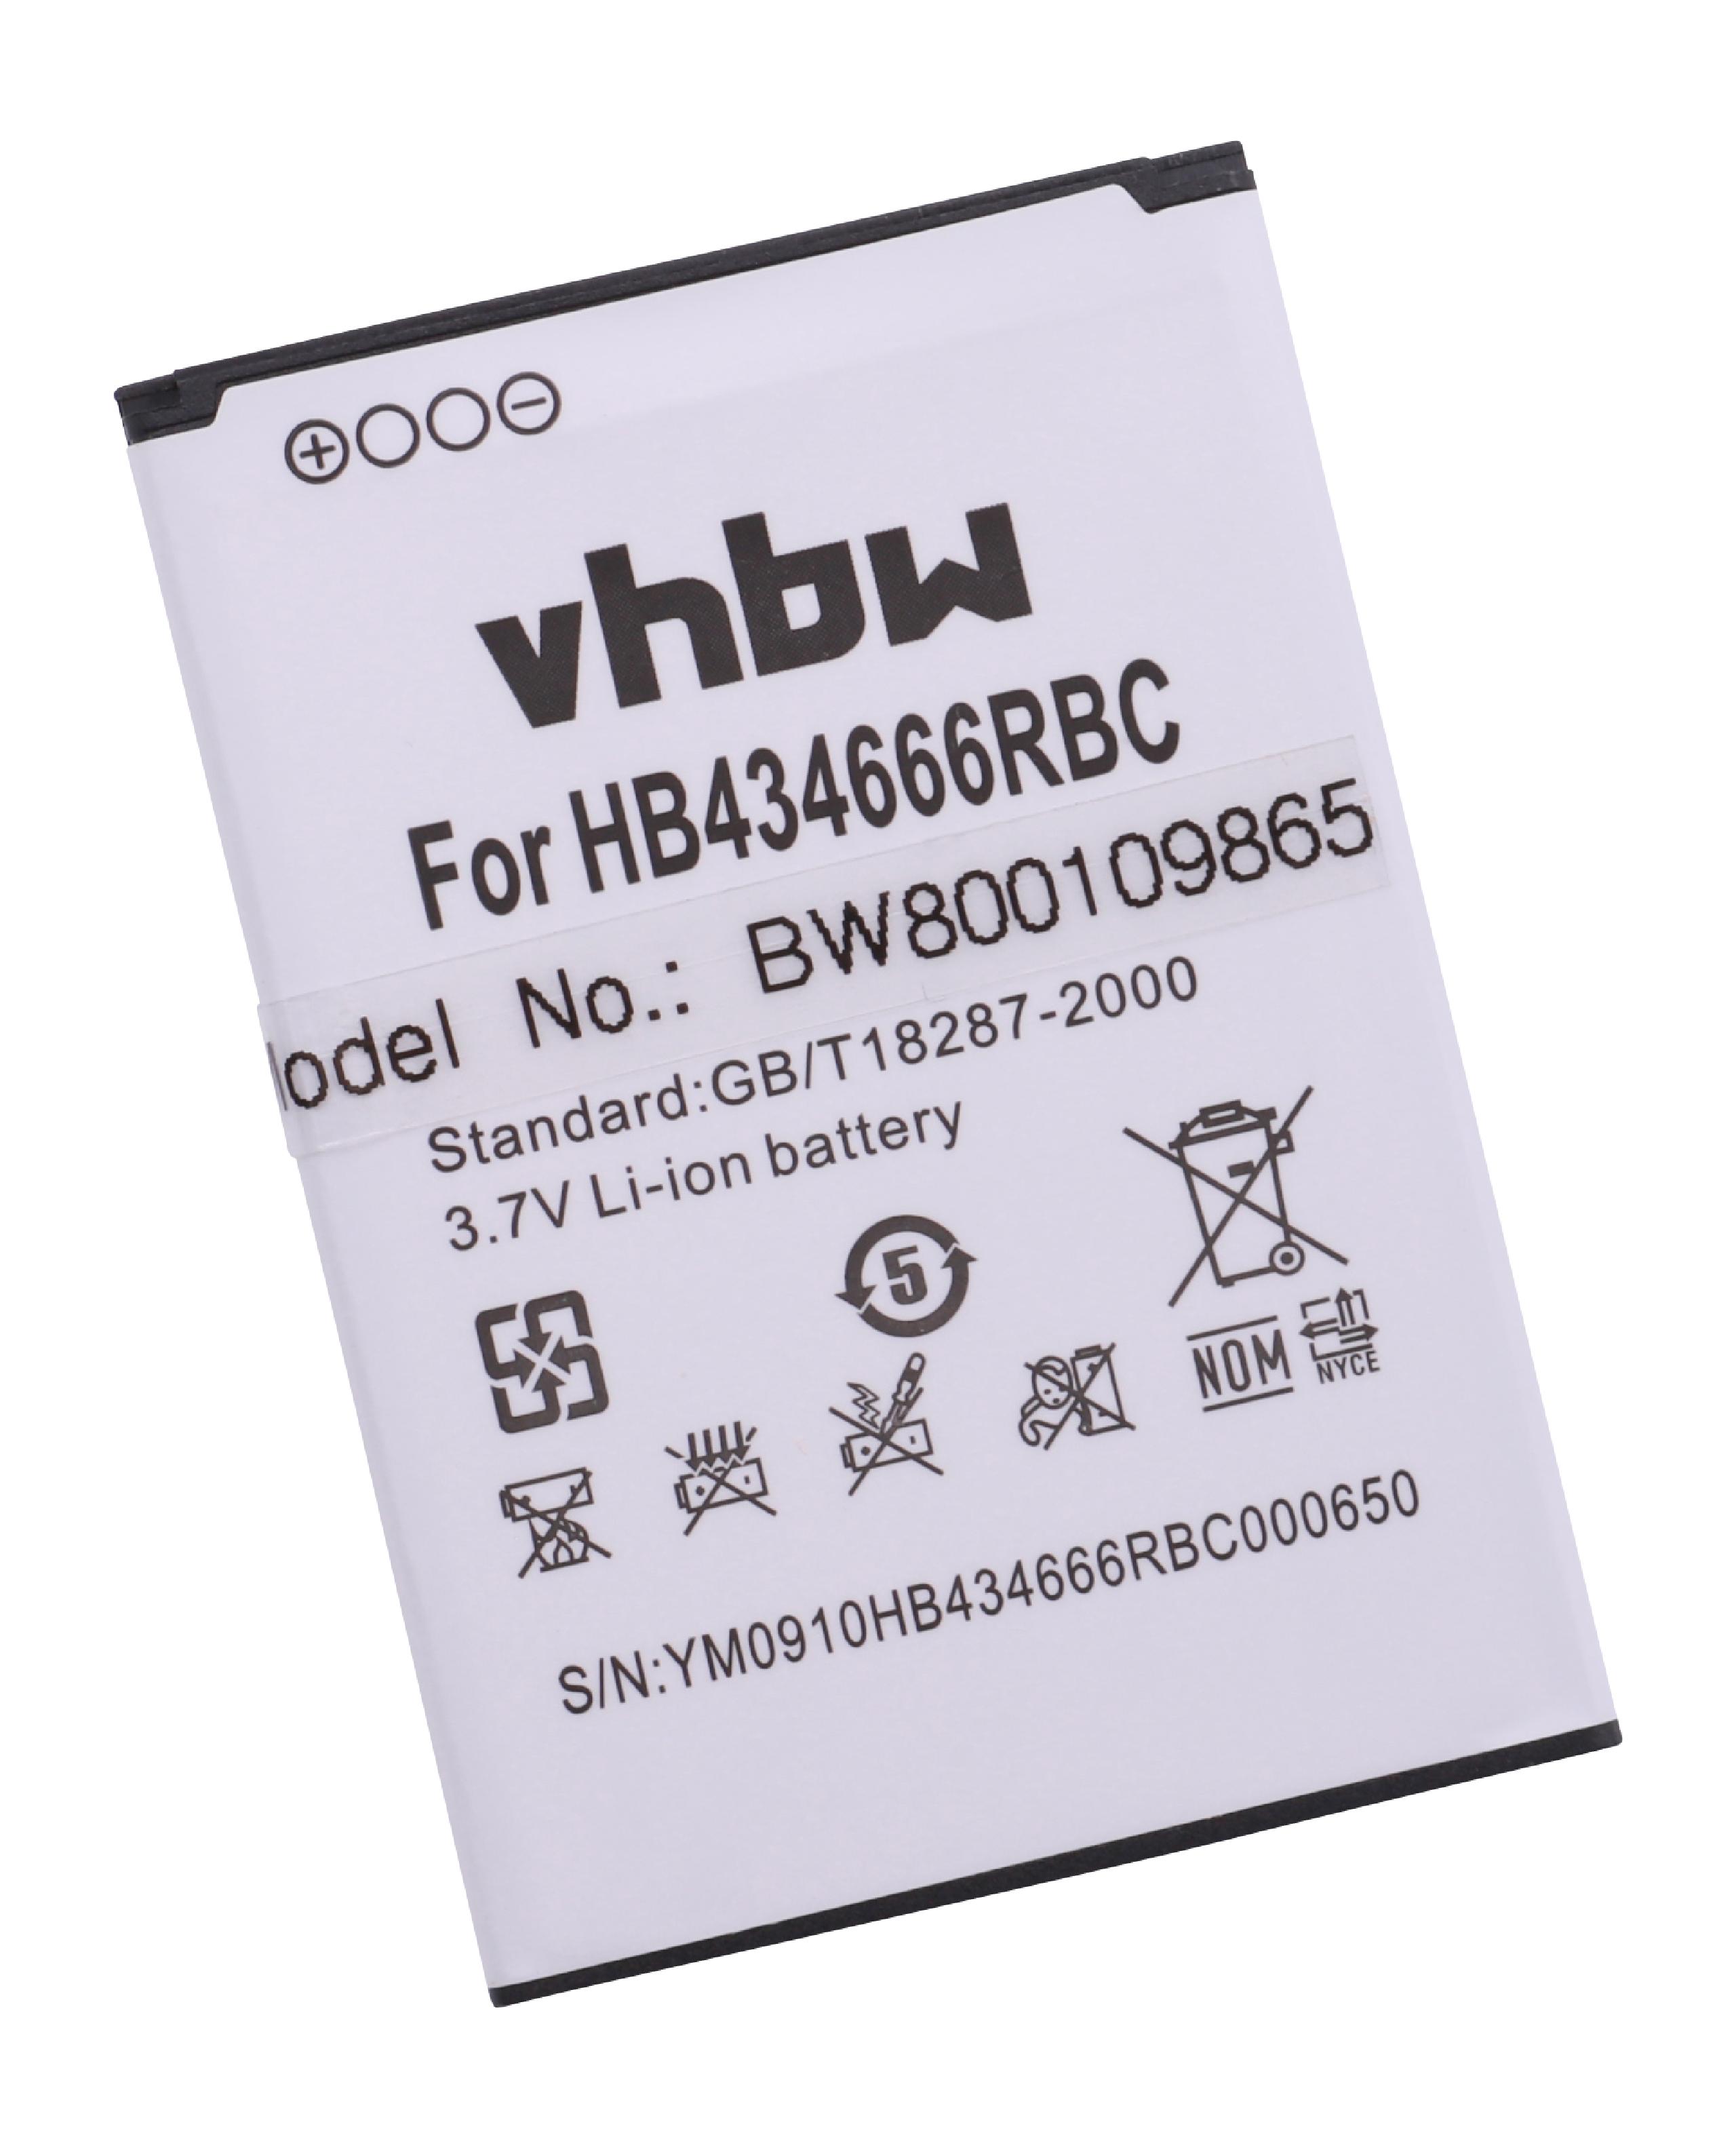 Router-Akku als Ersatz für Huawei HB434666RBC, HB434666RAW - 1500mAh 3,7V Li-Ion